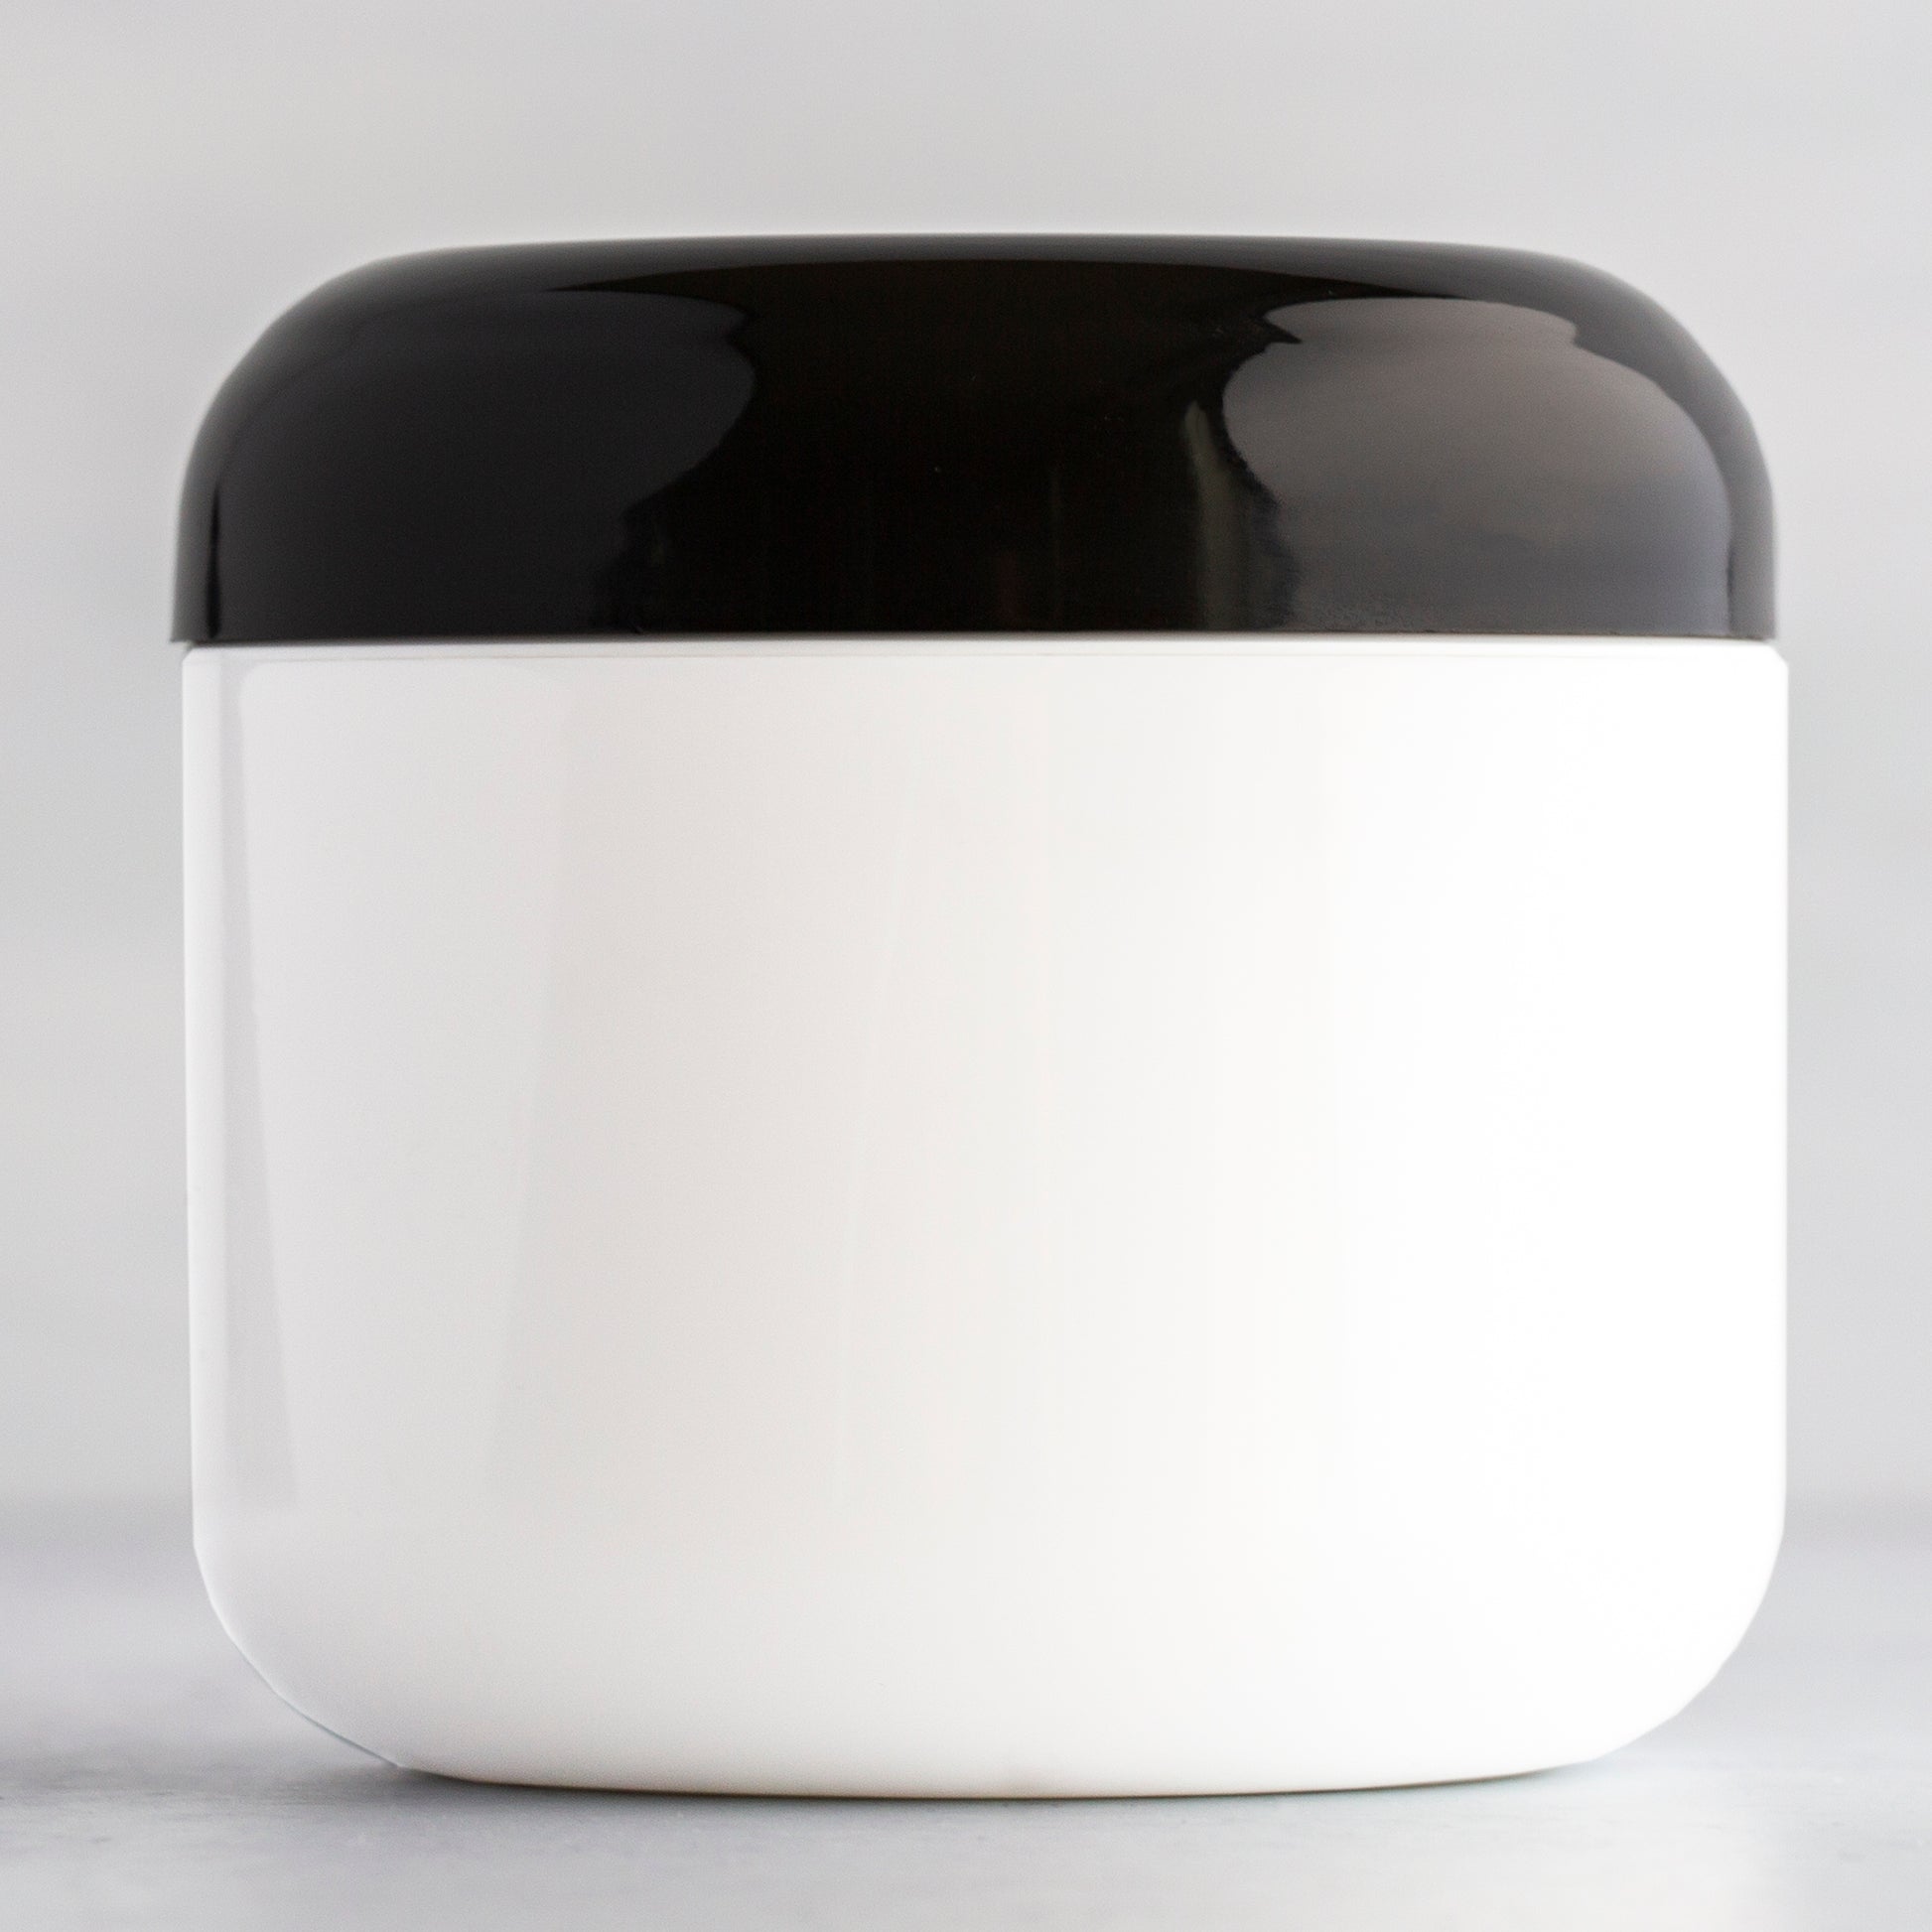 4 oz White Round Base Plastic Jar with Black Dome Cap